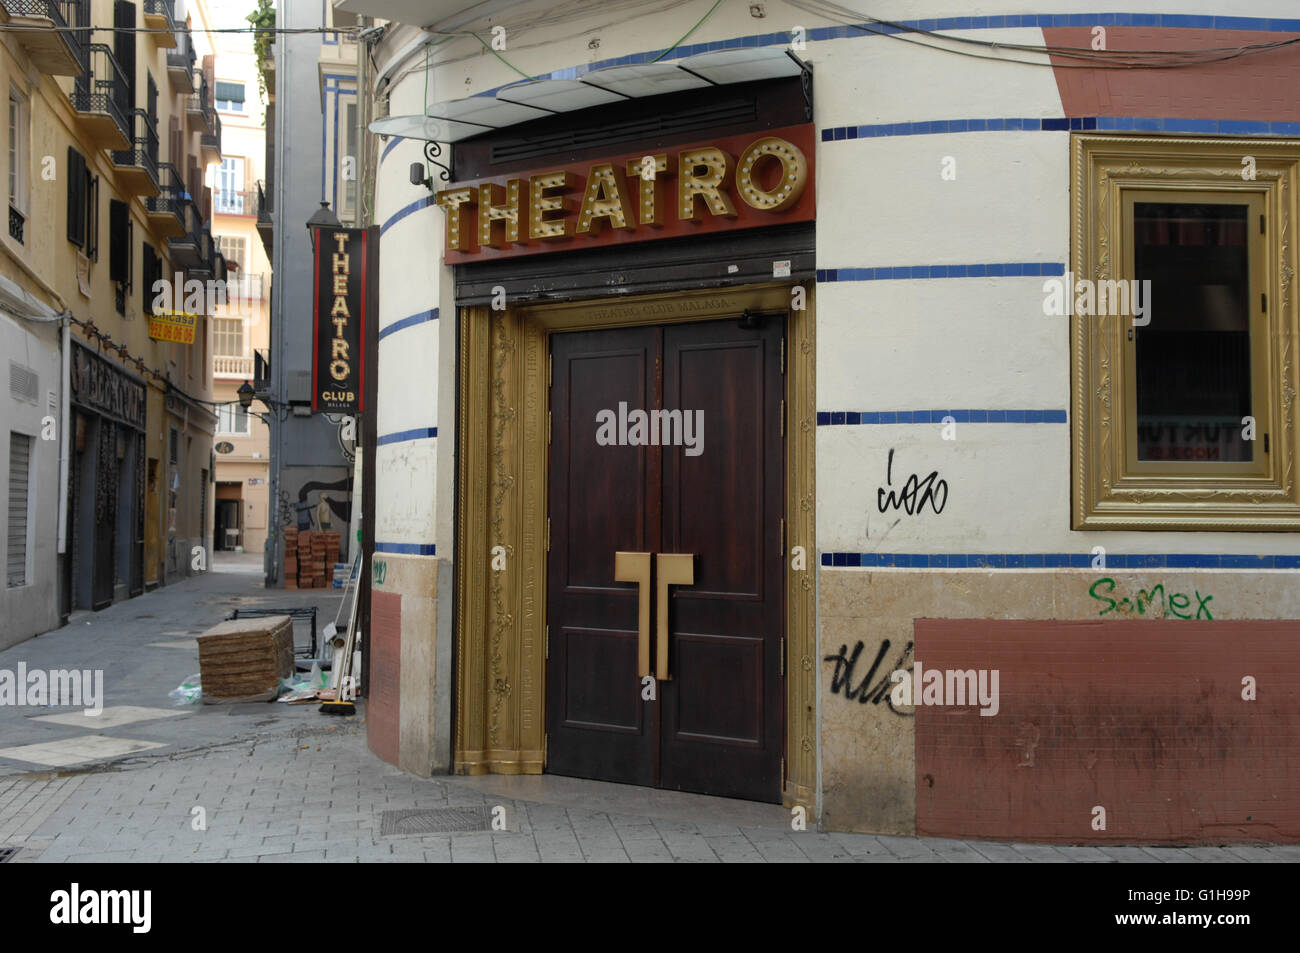 night club, Theatro, Malaga Stock Photo